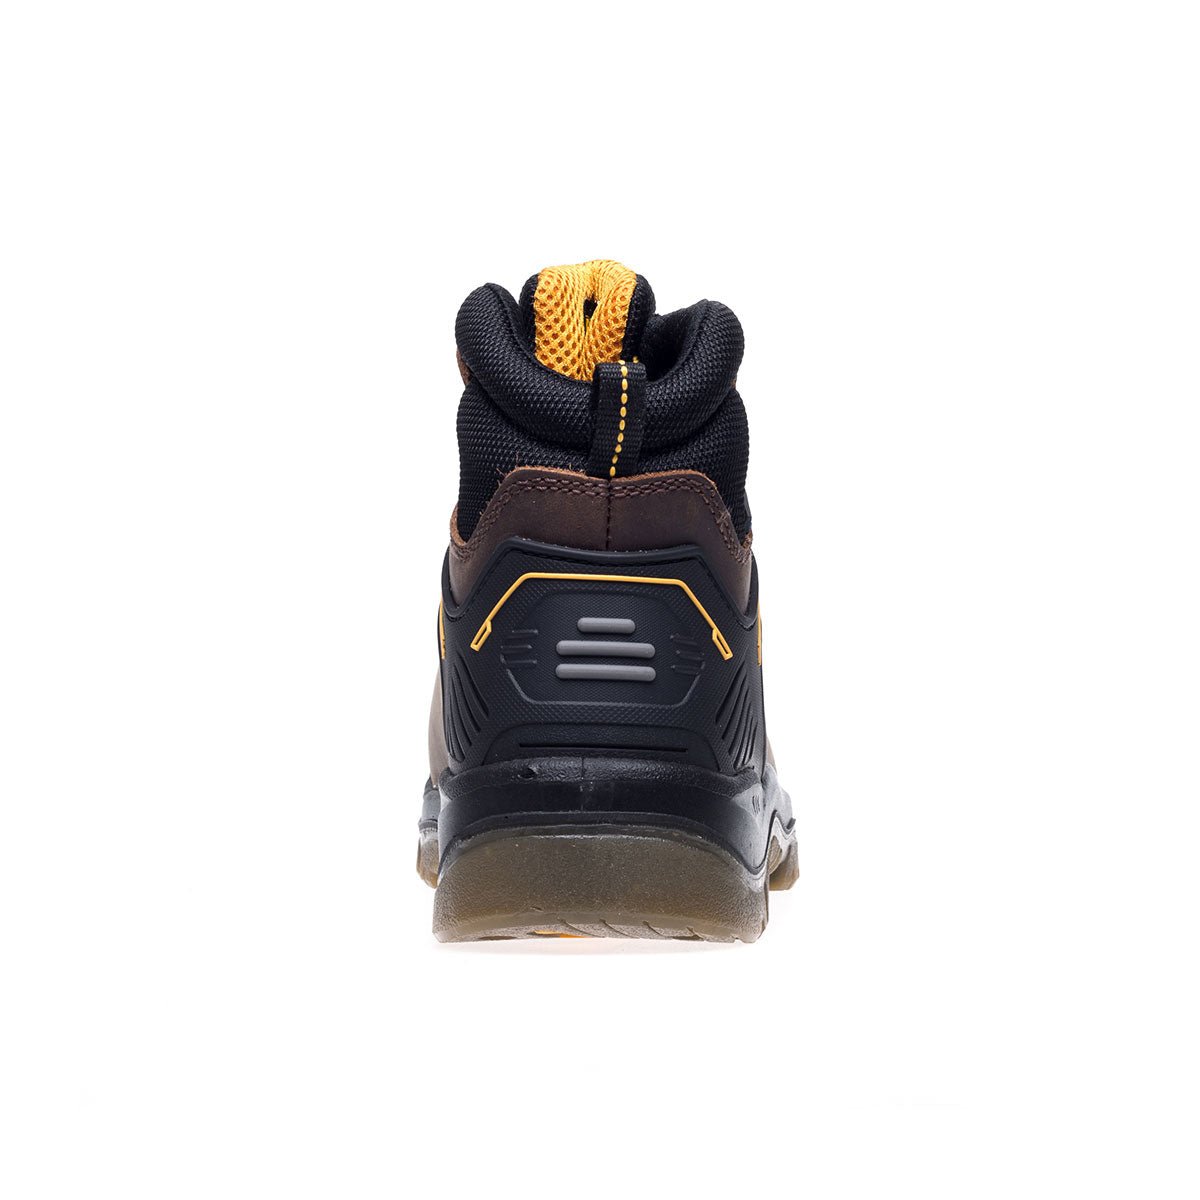 DeWalt Newark Waterproof Safety Hiker Boots - Brown - Shoe Store Direct